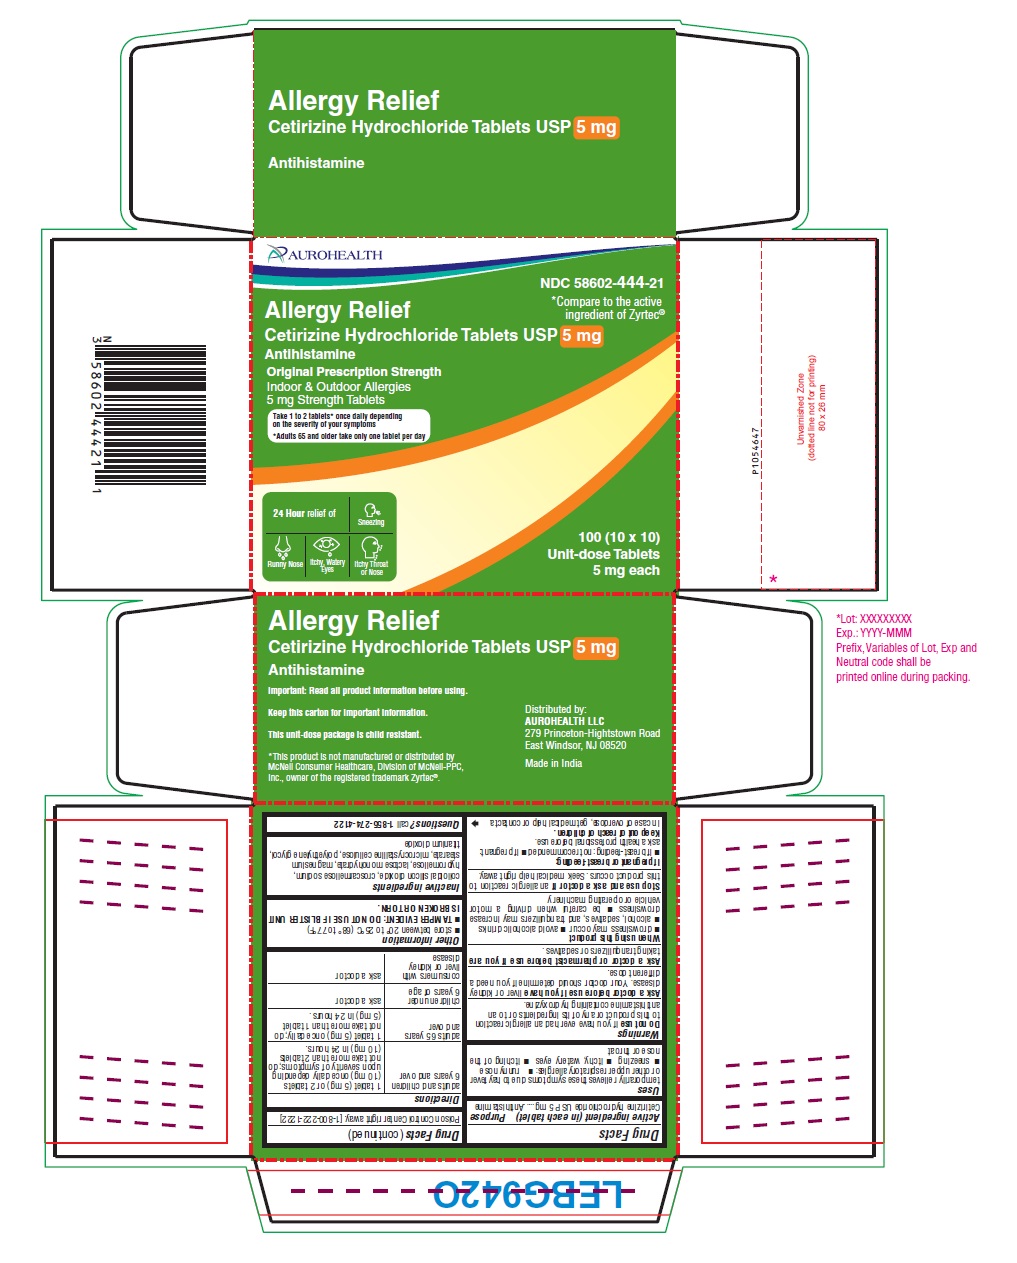 PACKAGE LABEL-PRINCIPAL DISPLAY PANEL -5 mg (10 x 10 Blister Carton Label)